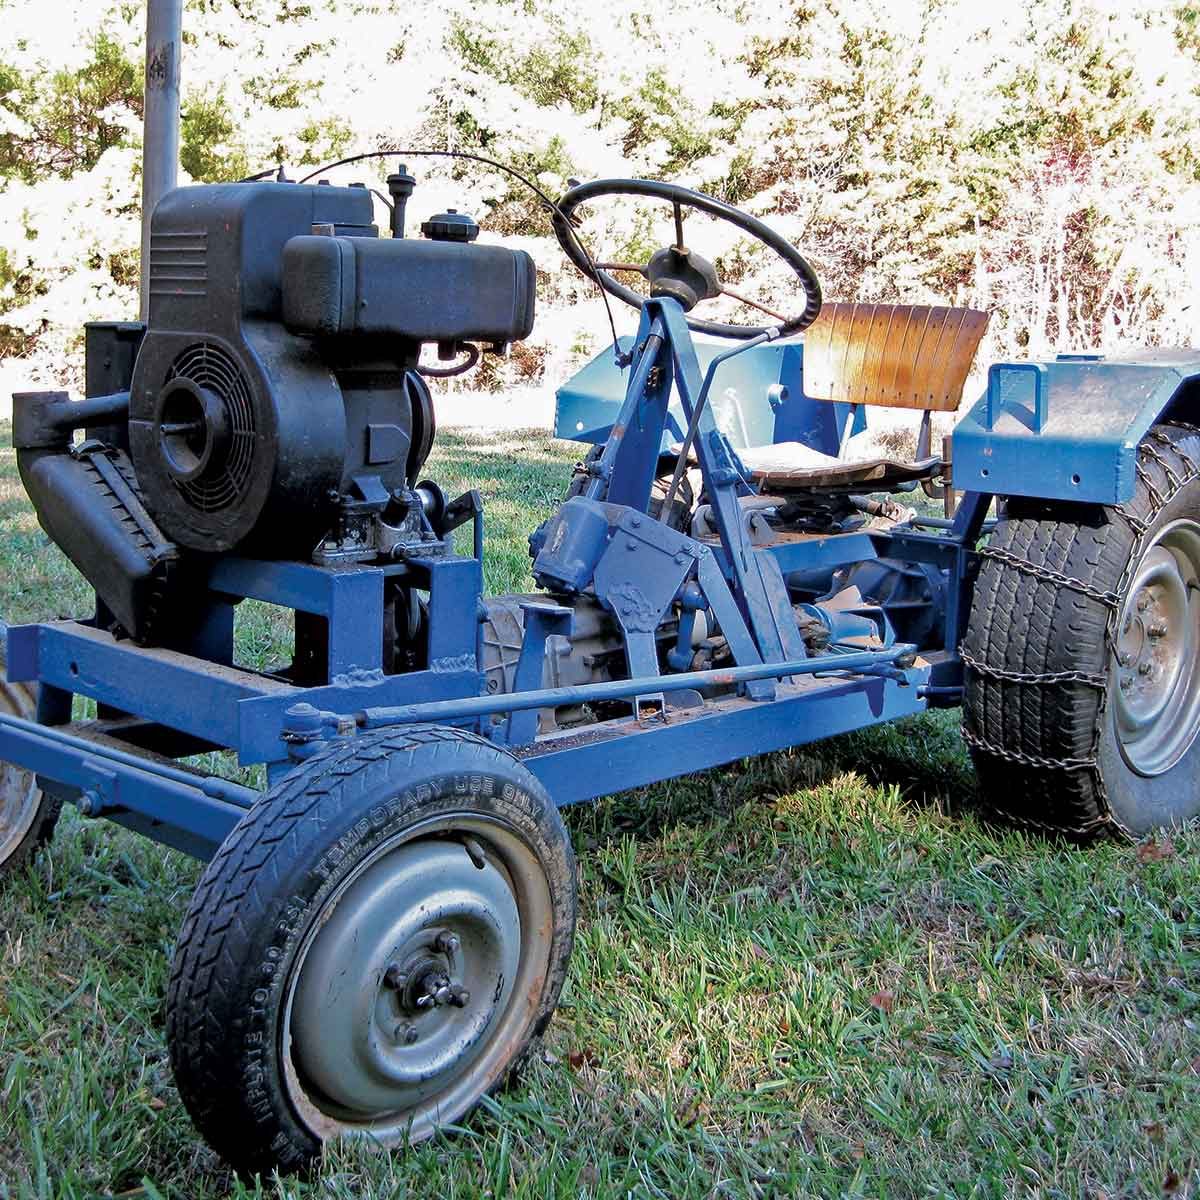 Garden Tractor Made With Junkyard Parts